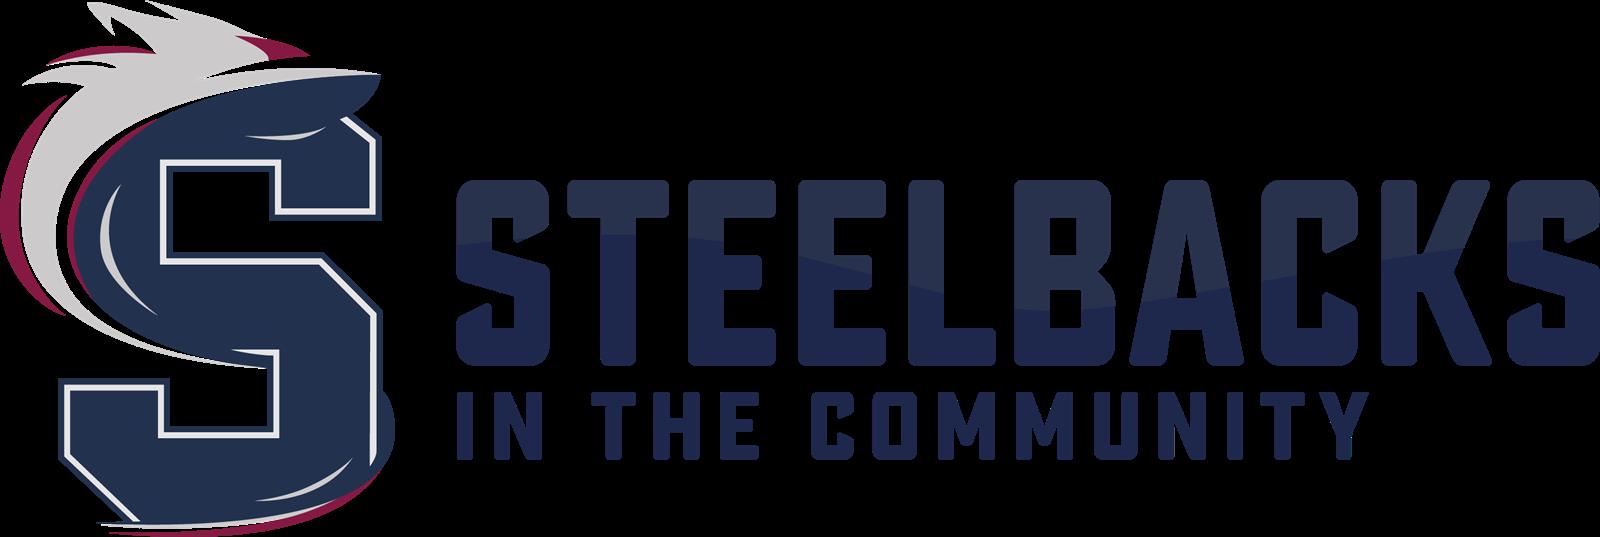 The Steelbacks In The Community community image